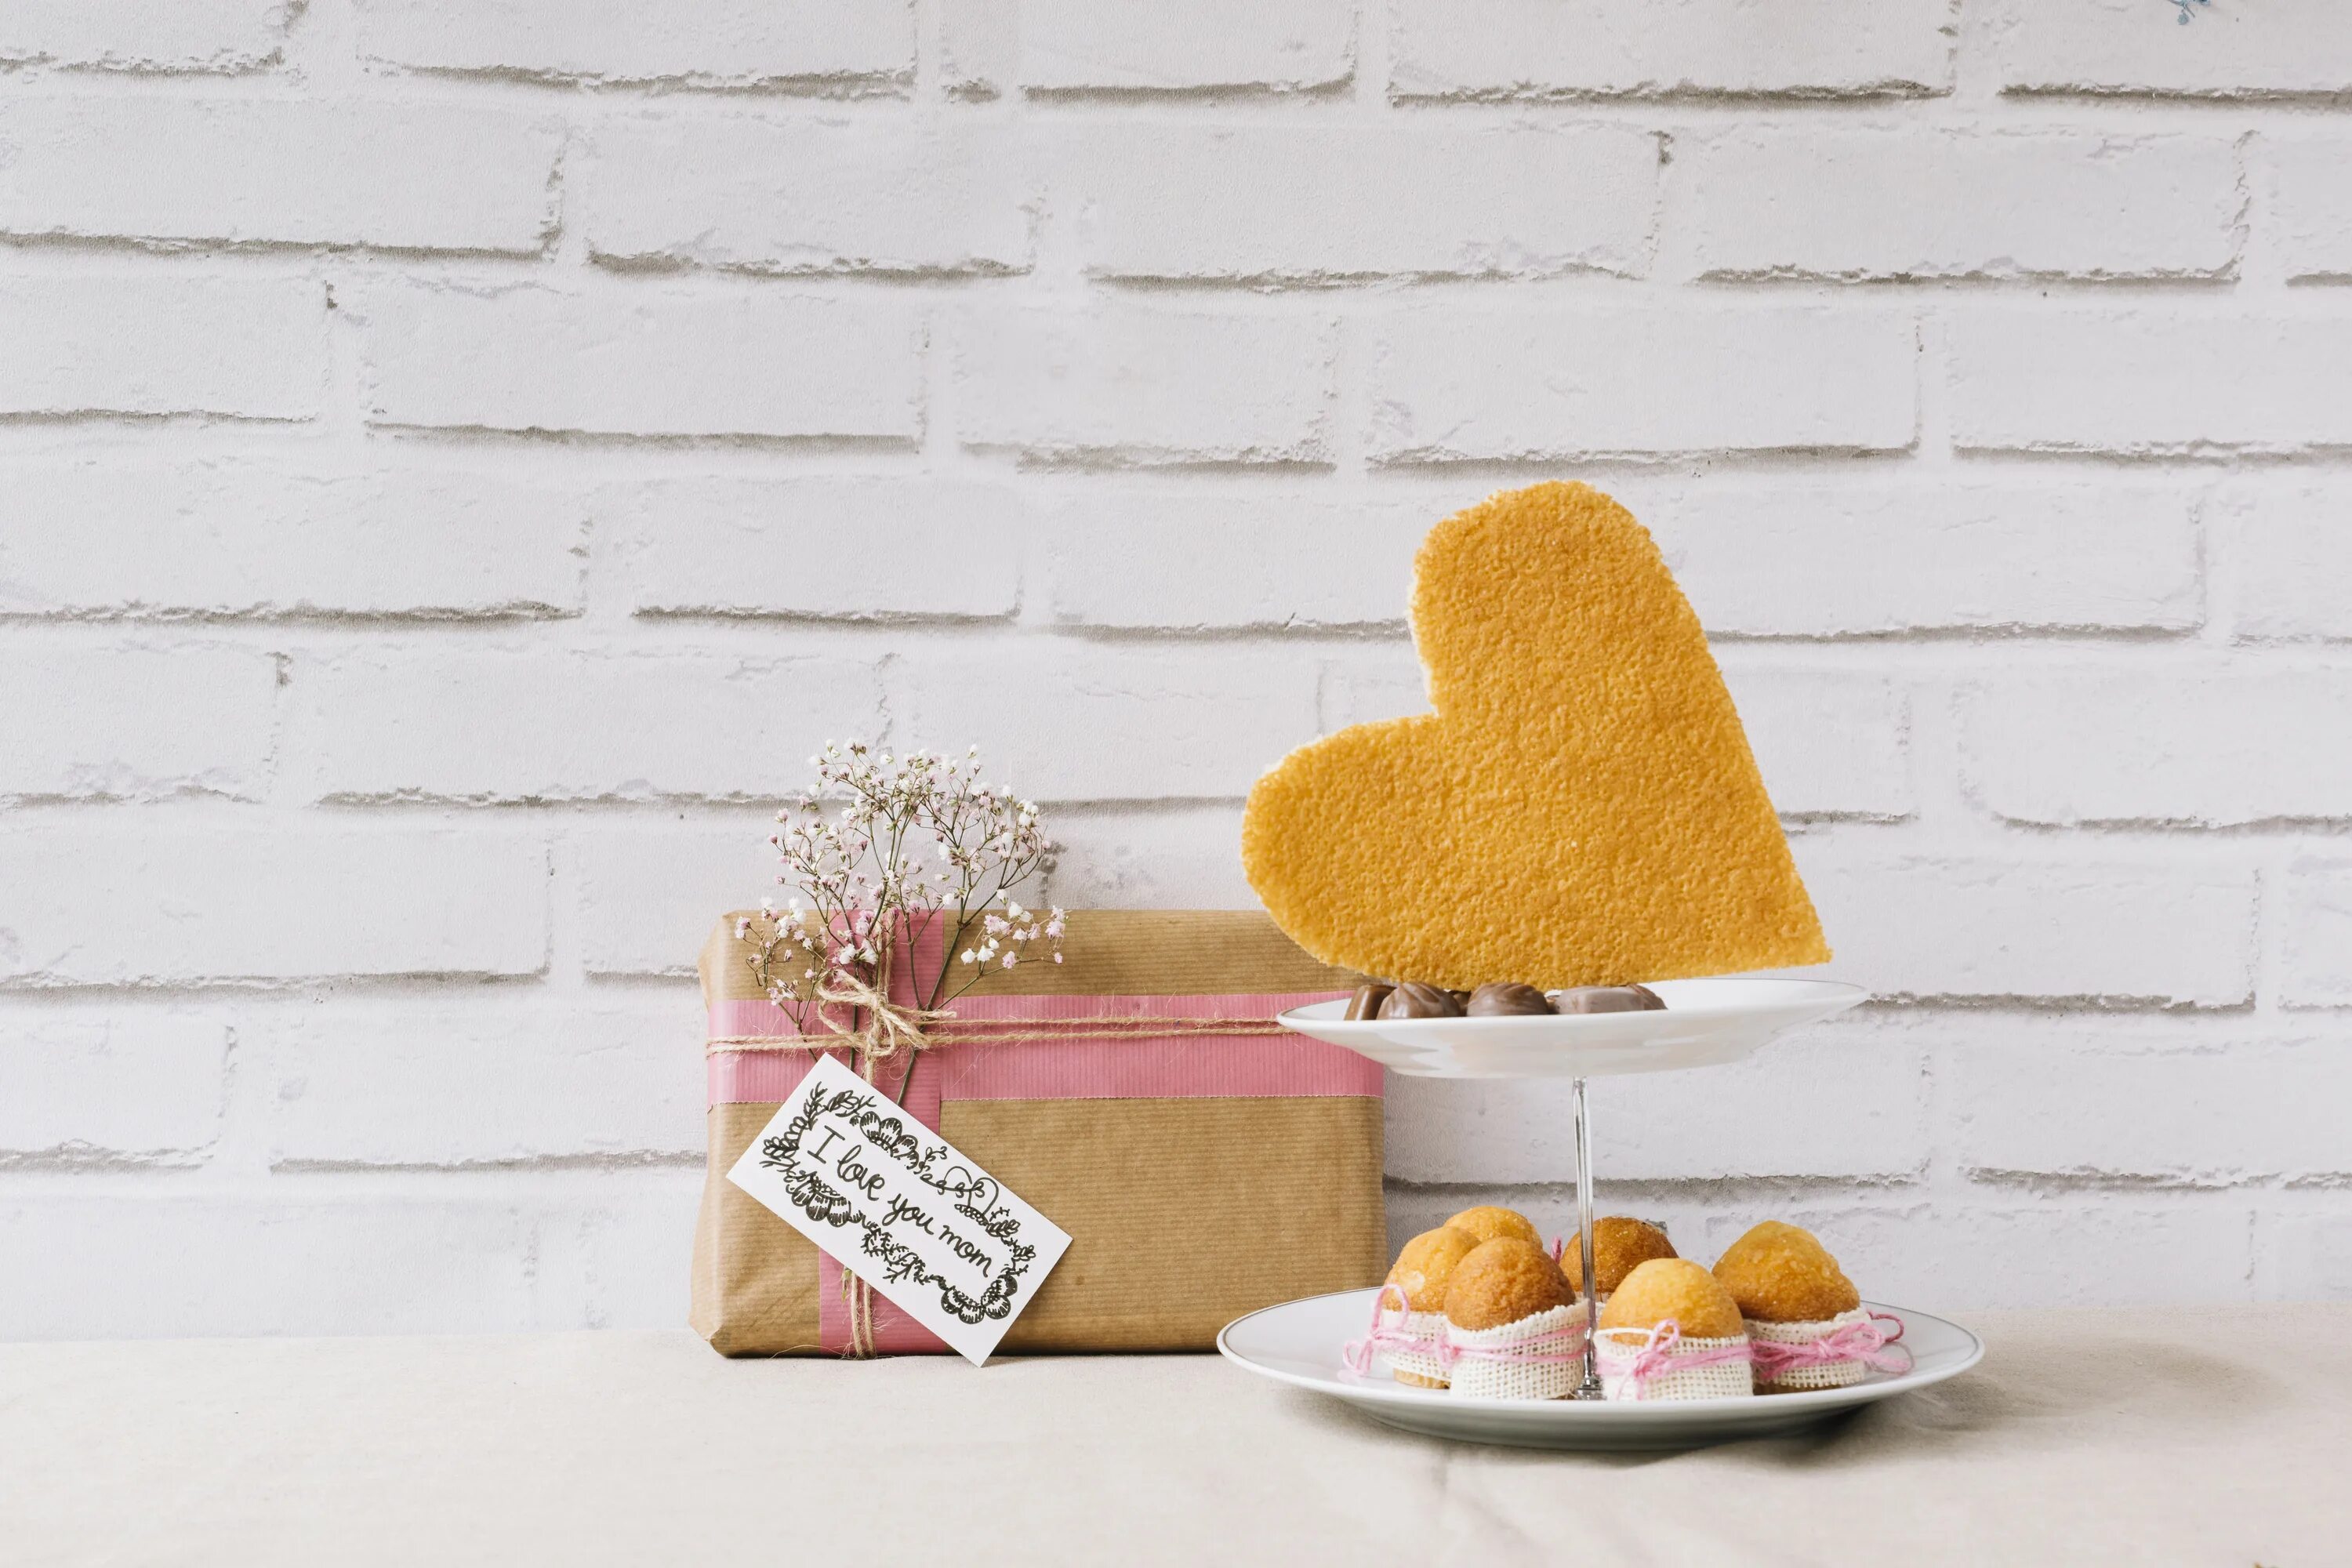 A little cake. Подарочная еда. Стена с конфетами. Пирожное стенка. Картинка стол с подарками и едой.